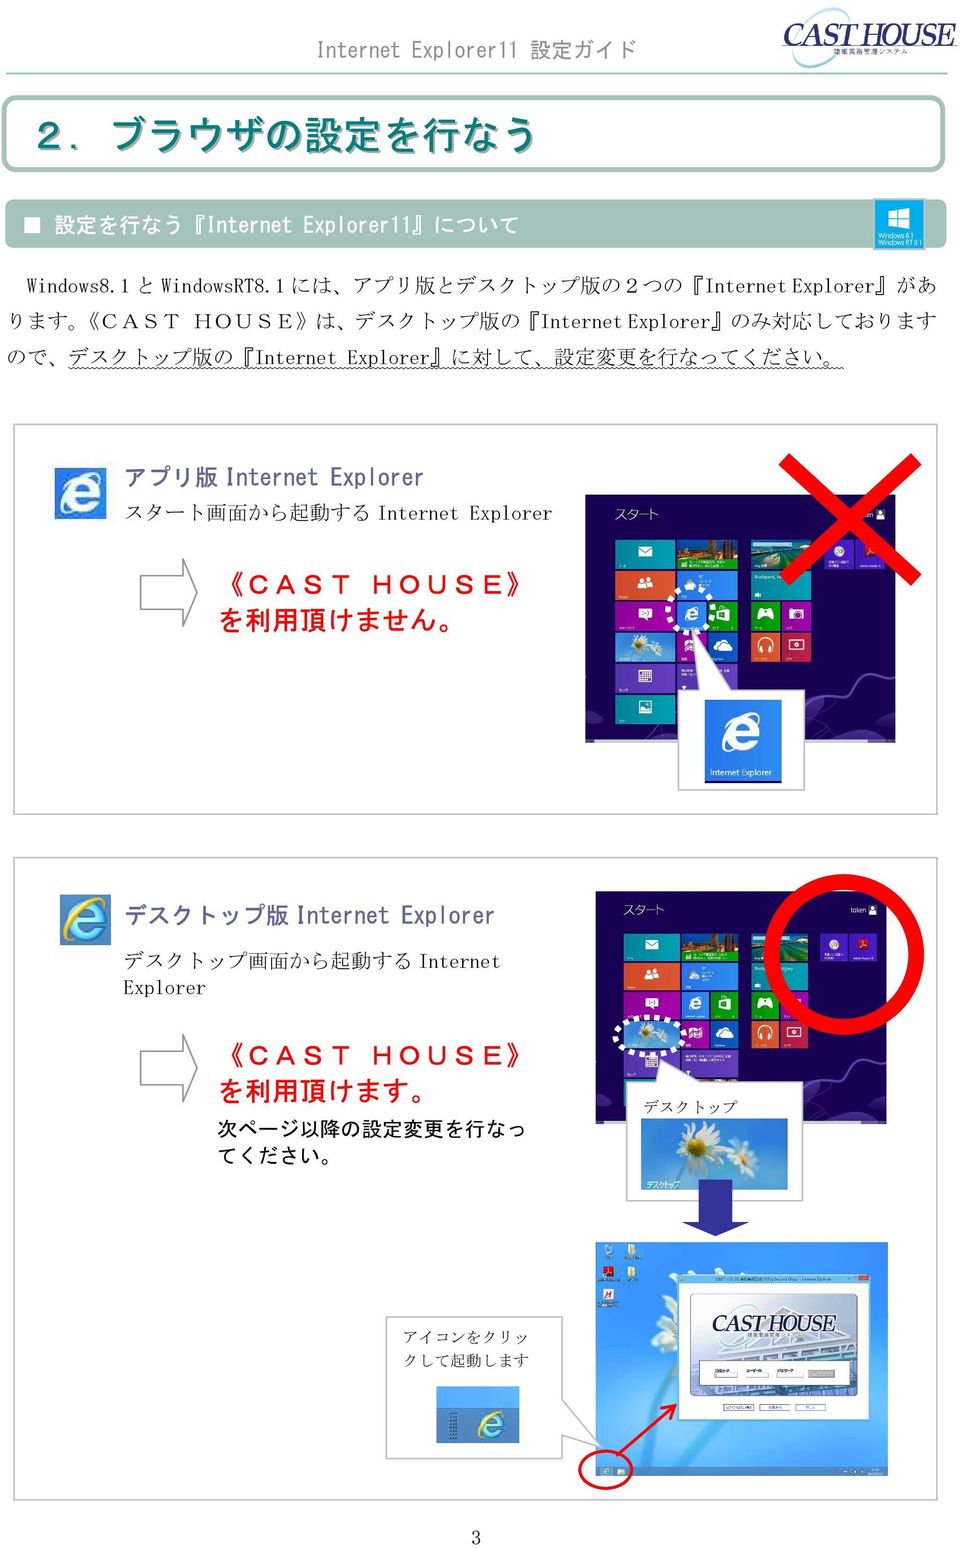 Internet Explorer に 対 して 設 定 変 更 を 行 なってください アプリ 版 Internet Explorer スタート 画 面 から 起 動 する Internet Explorer CAST HOUSE を 利